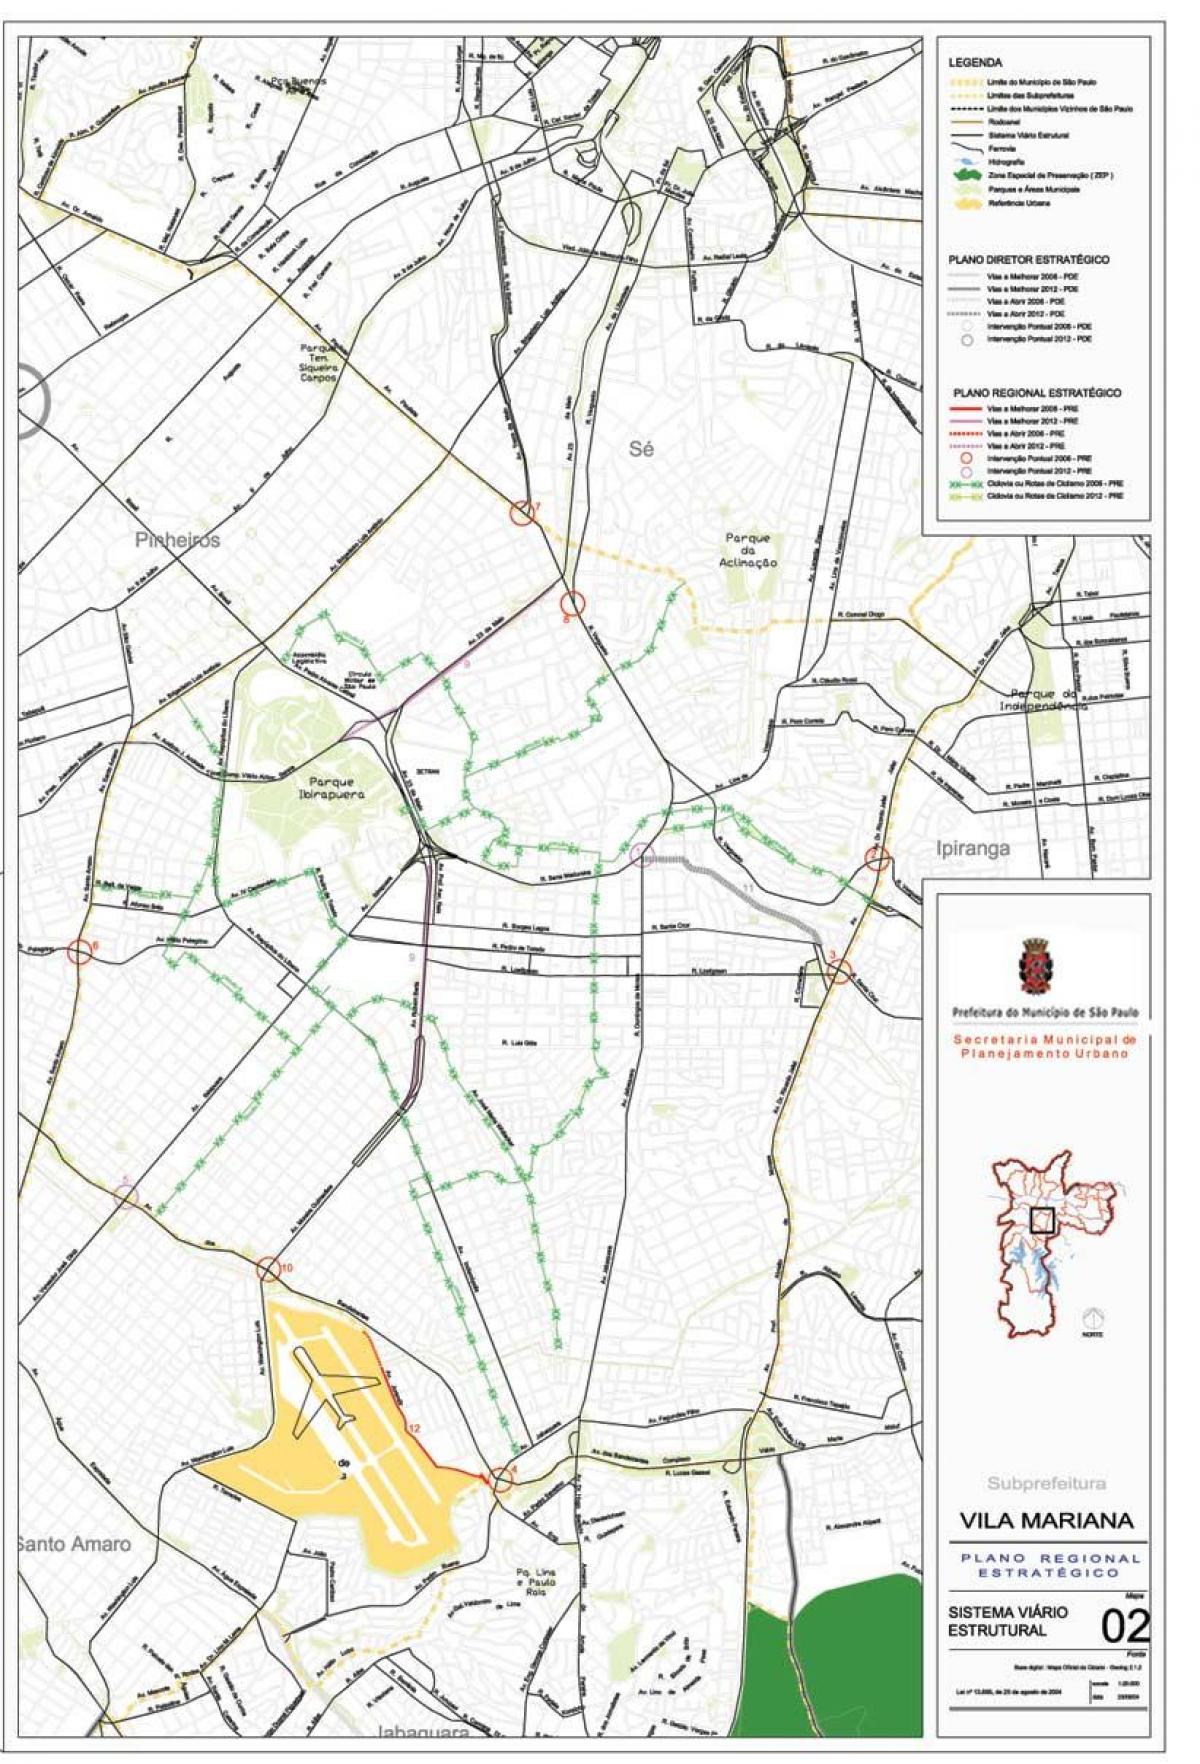 Map of Vila Mariana São Paulo - Roads